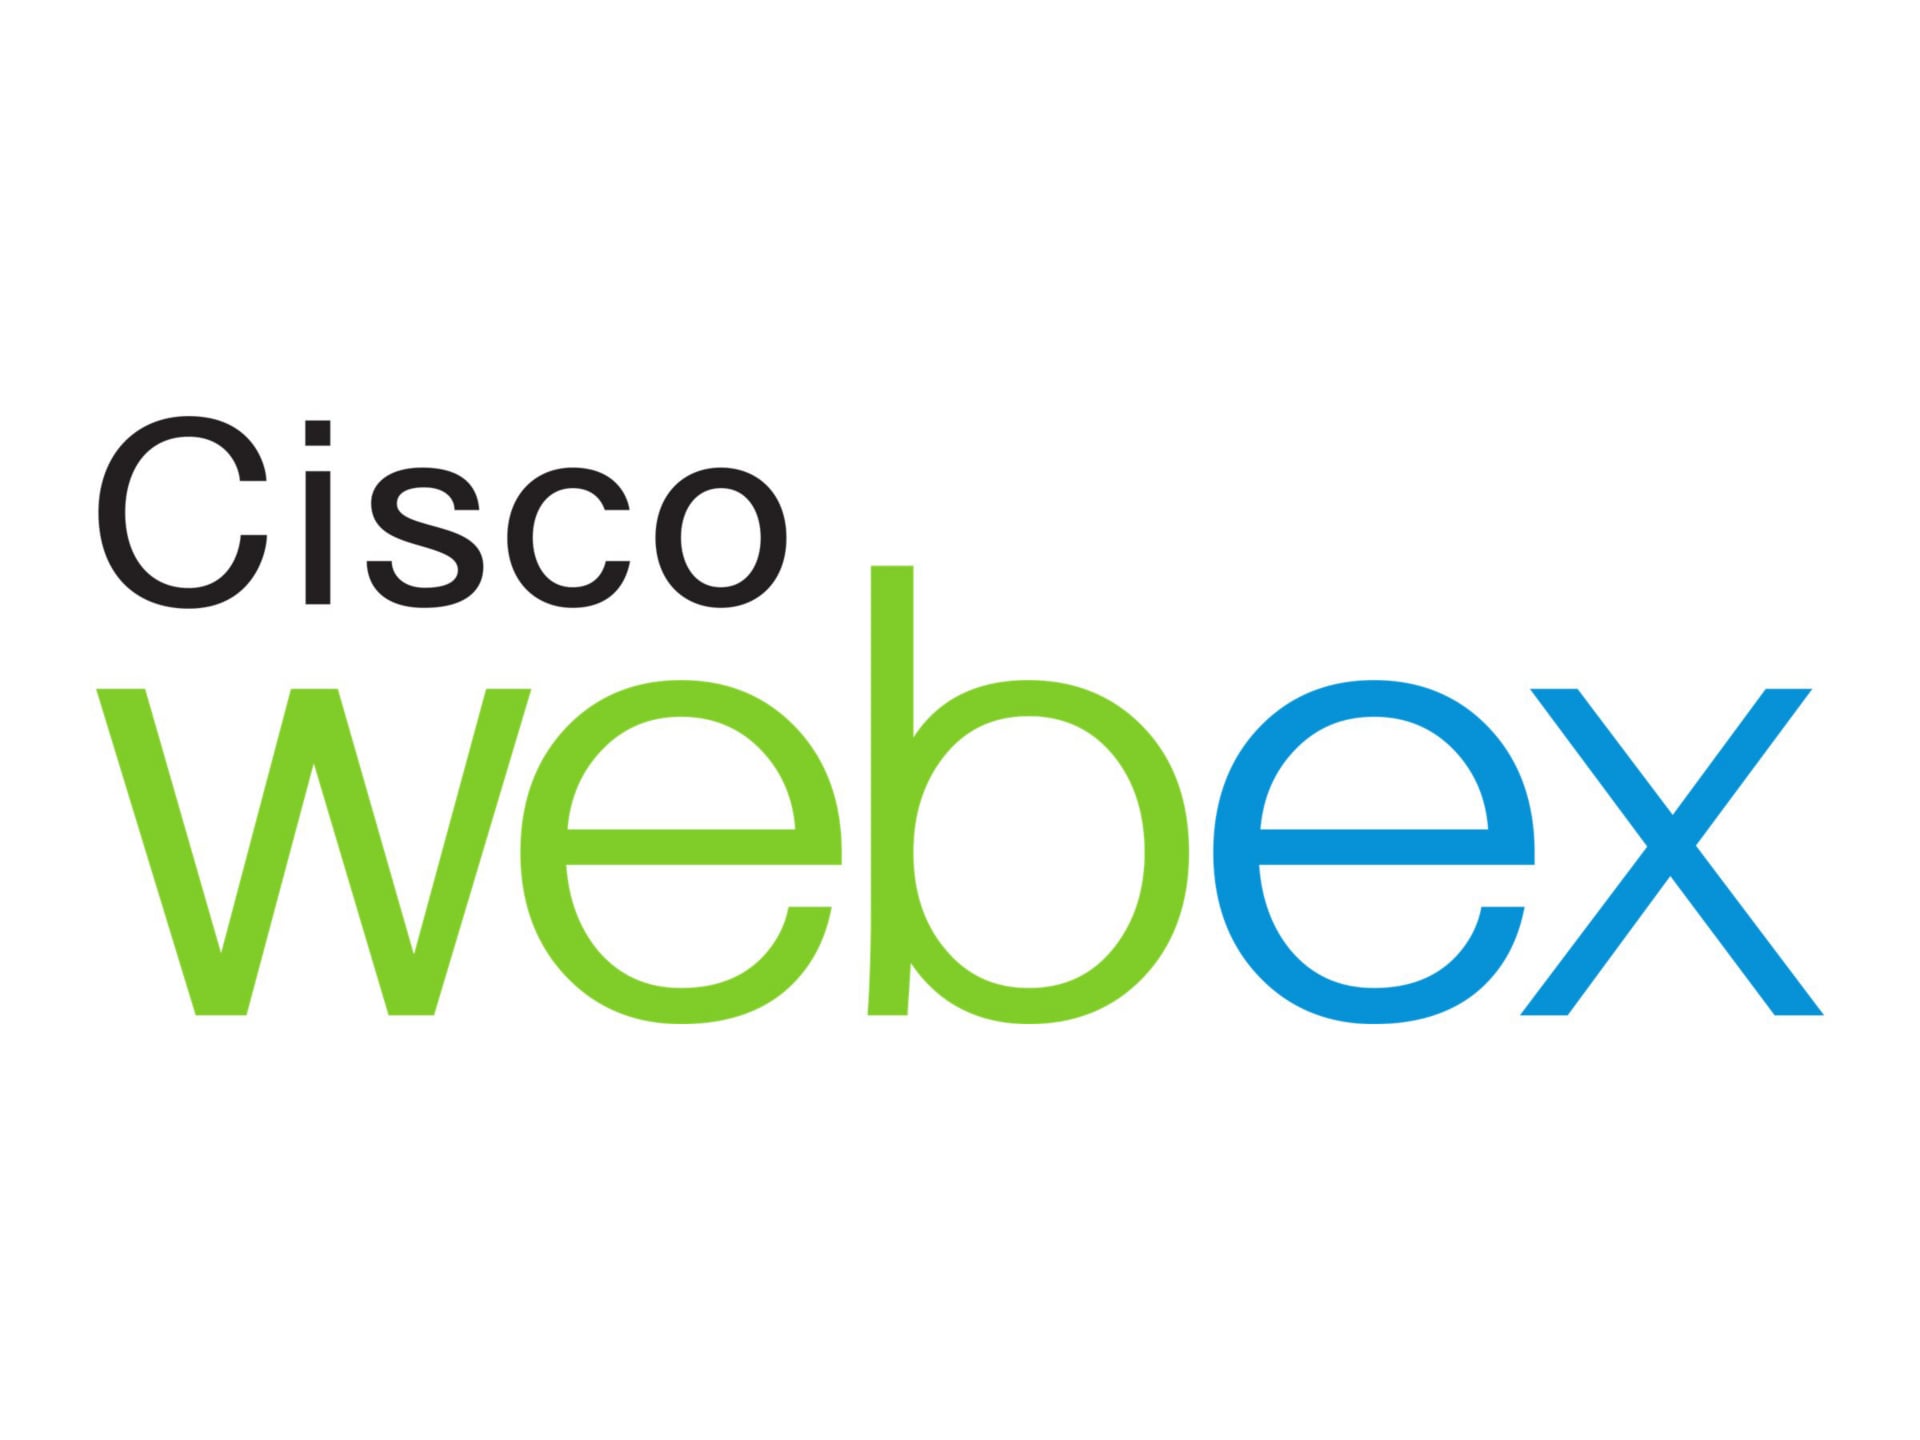 Cisco WebEx Audio - subscription license (33 months) - 5000 minutes per month